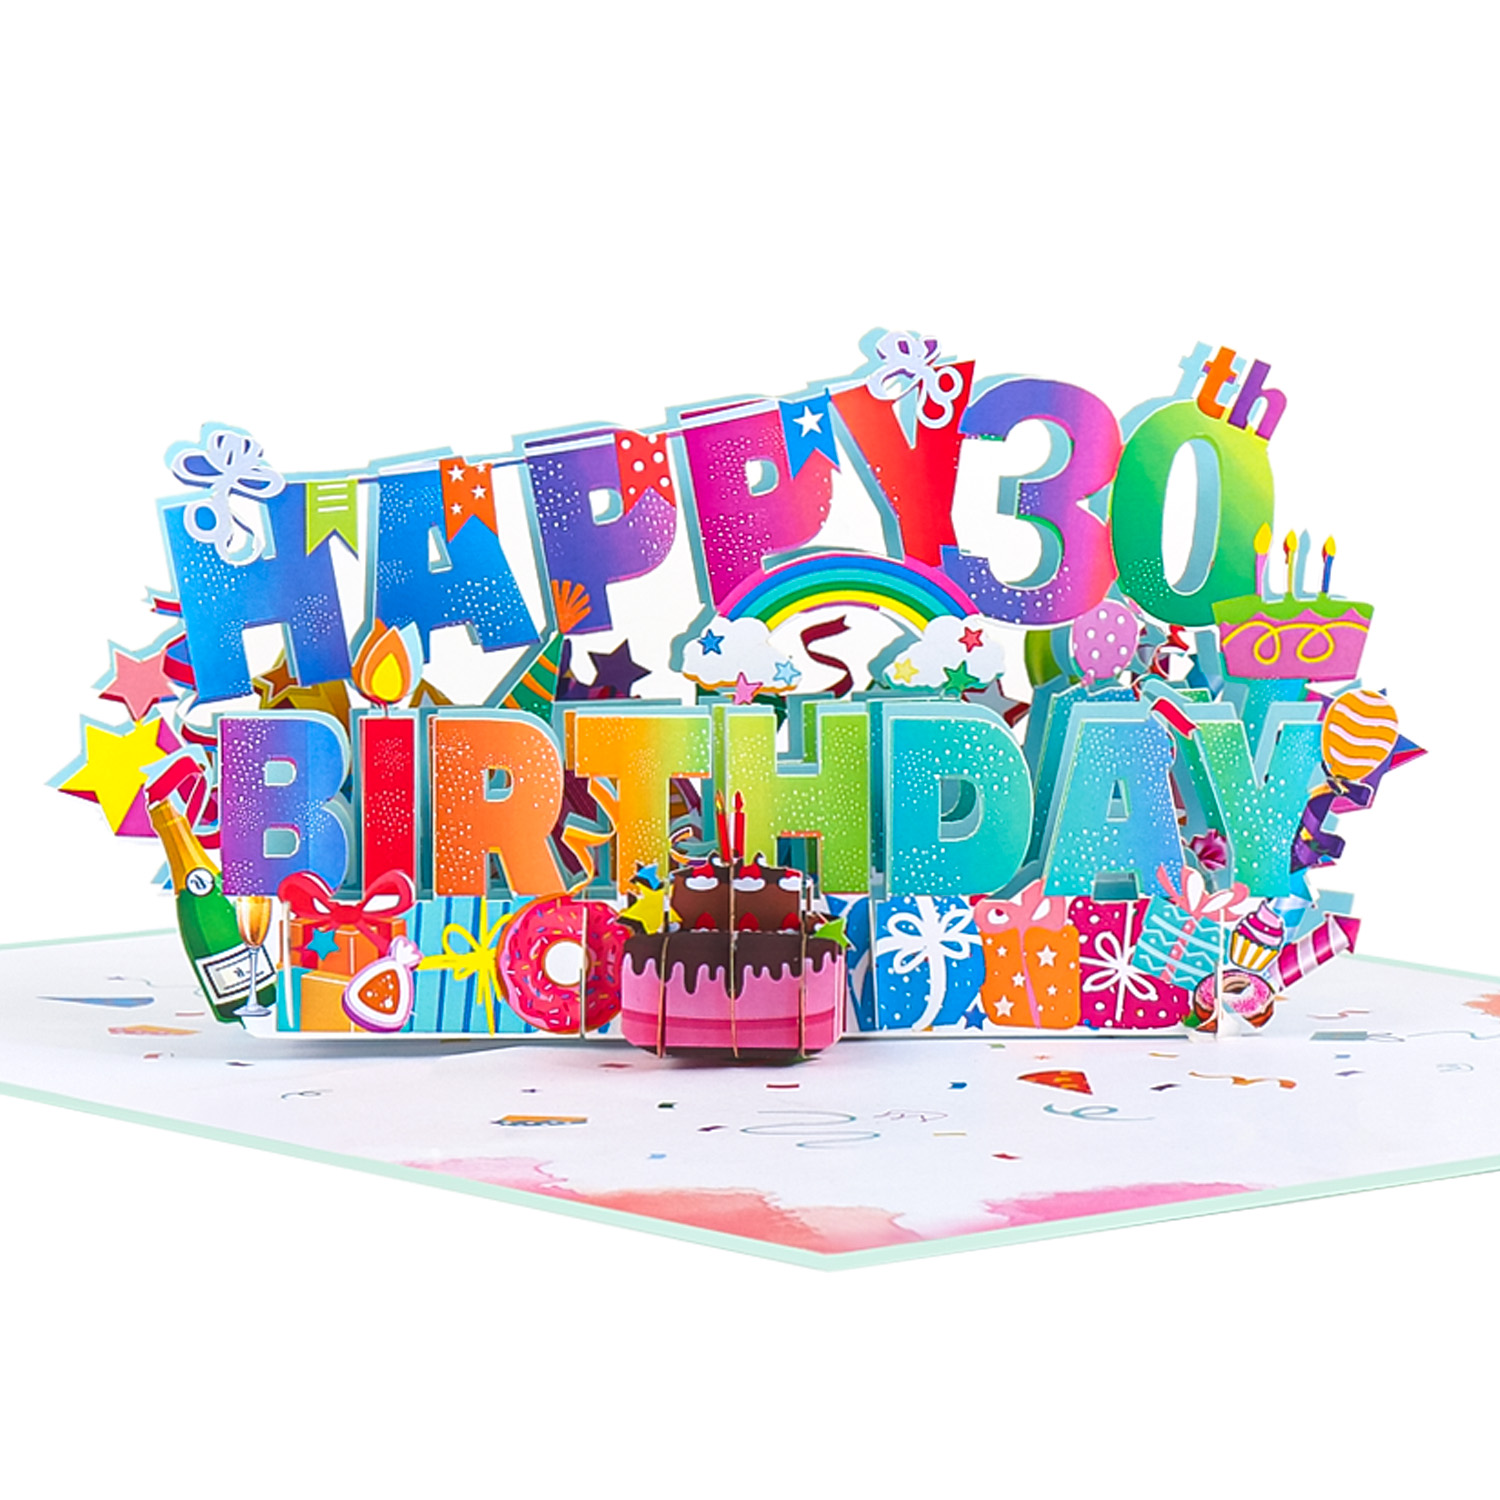 Birthday-pop-up-card-detail-BG142-pop-up-card-wholesale-manufacturer-3d-pop-up-greeting-card-3d-birthday-pop-up-card-3d-greeting-card-laser-cut-3.jpg